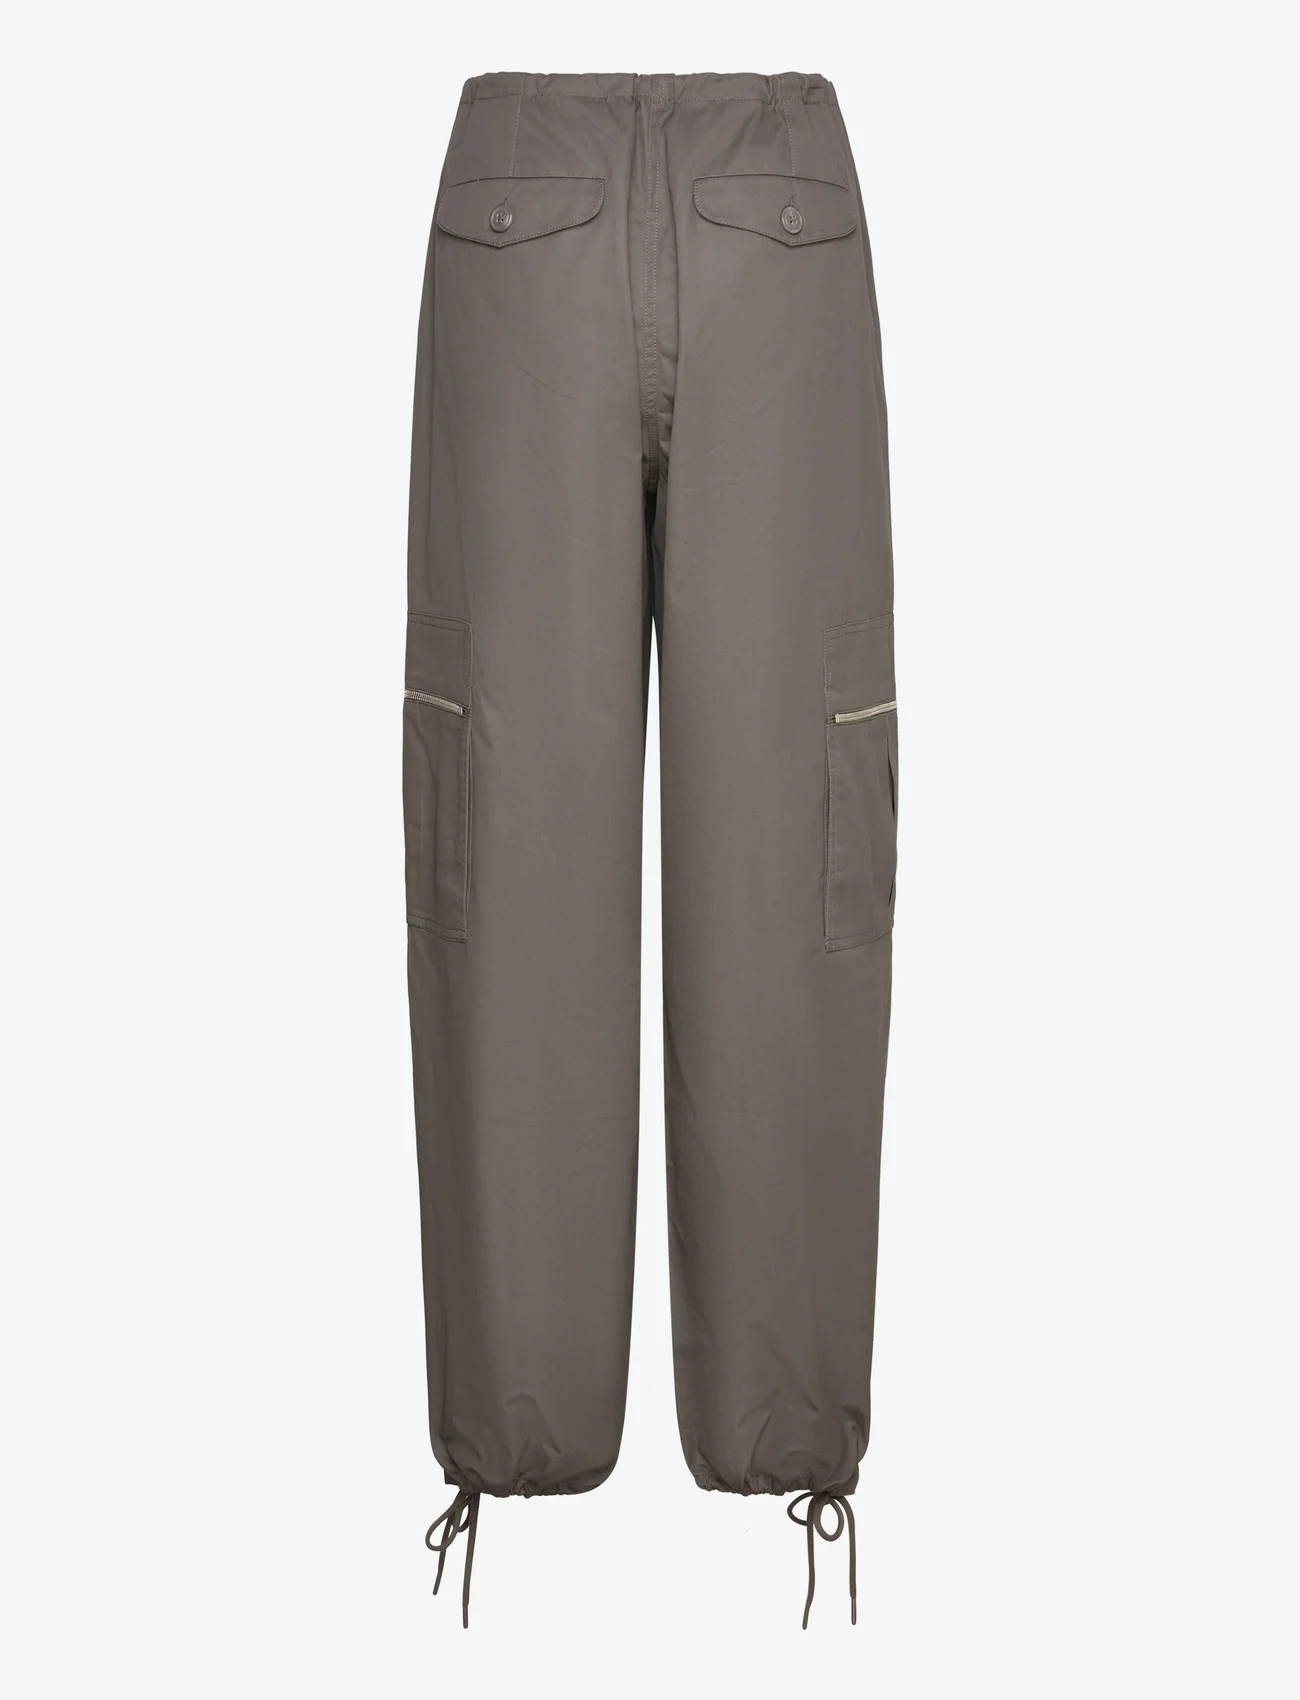 Samsøe Samsøe - Chi trousers 14906 - cargo-housut - major brown - 1